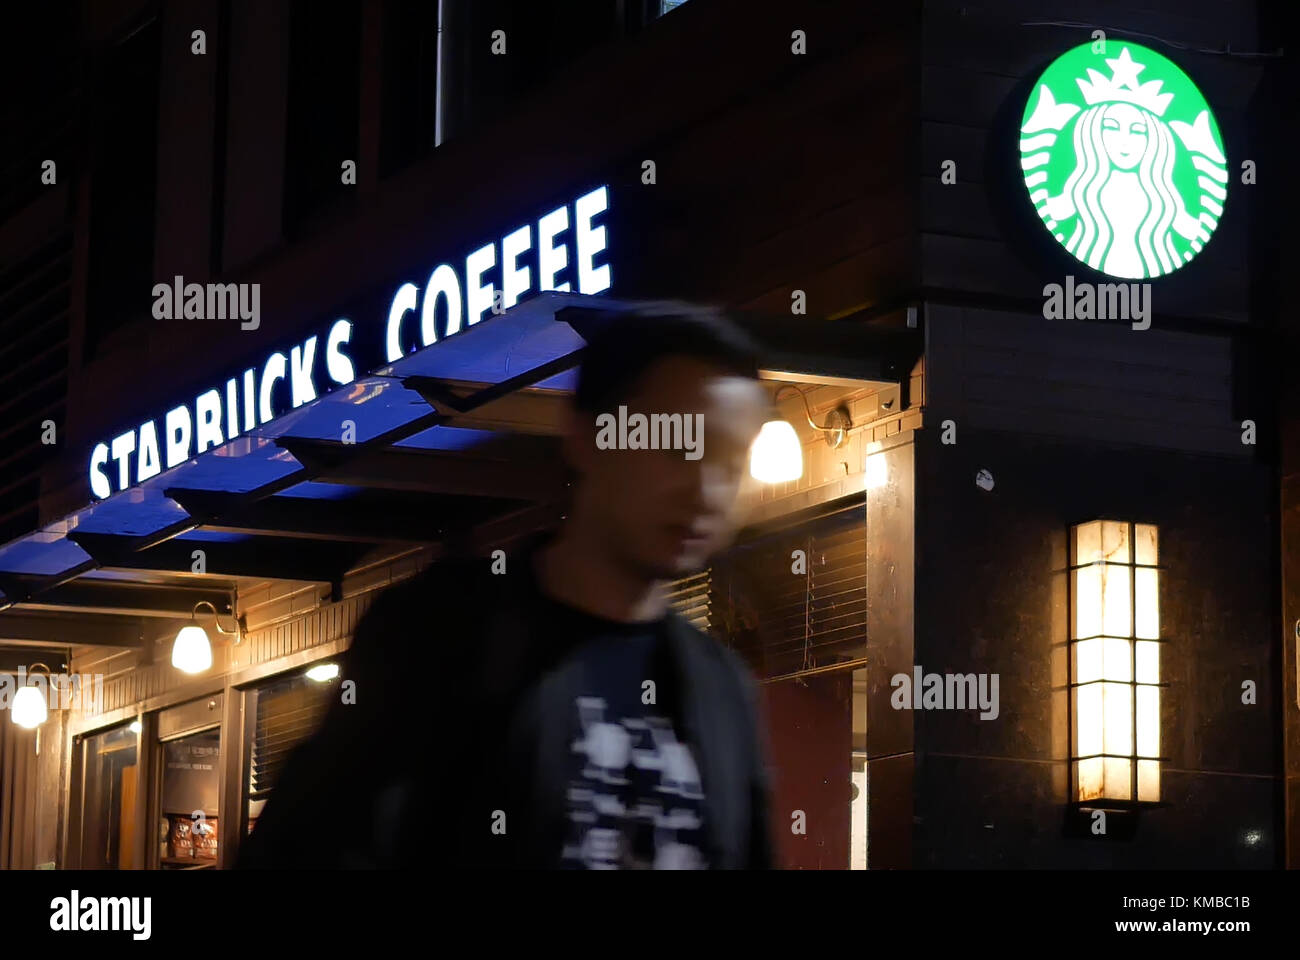 Taipei, Taiwan - October 27, 2017 : Motion of customer walking through Starbucks coffee shop at night Stock Photo